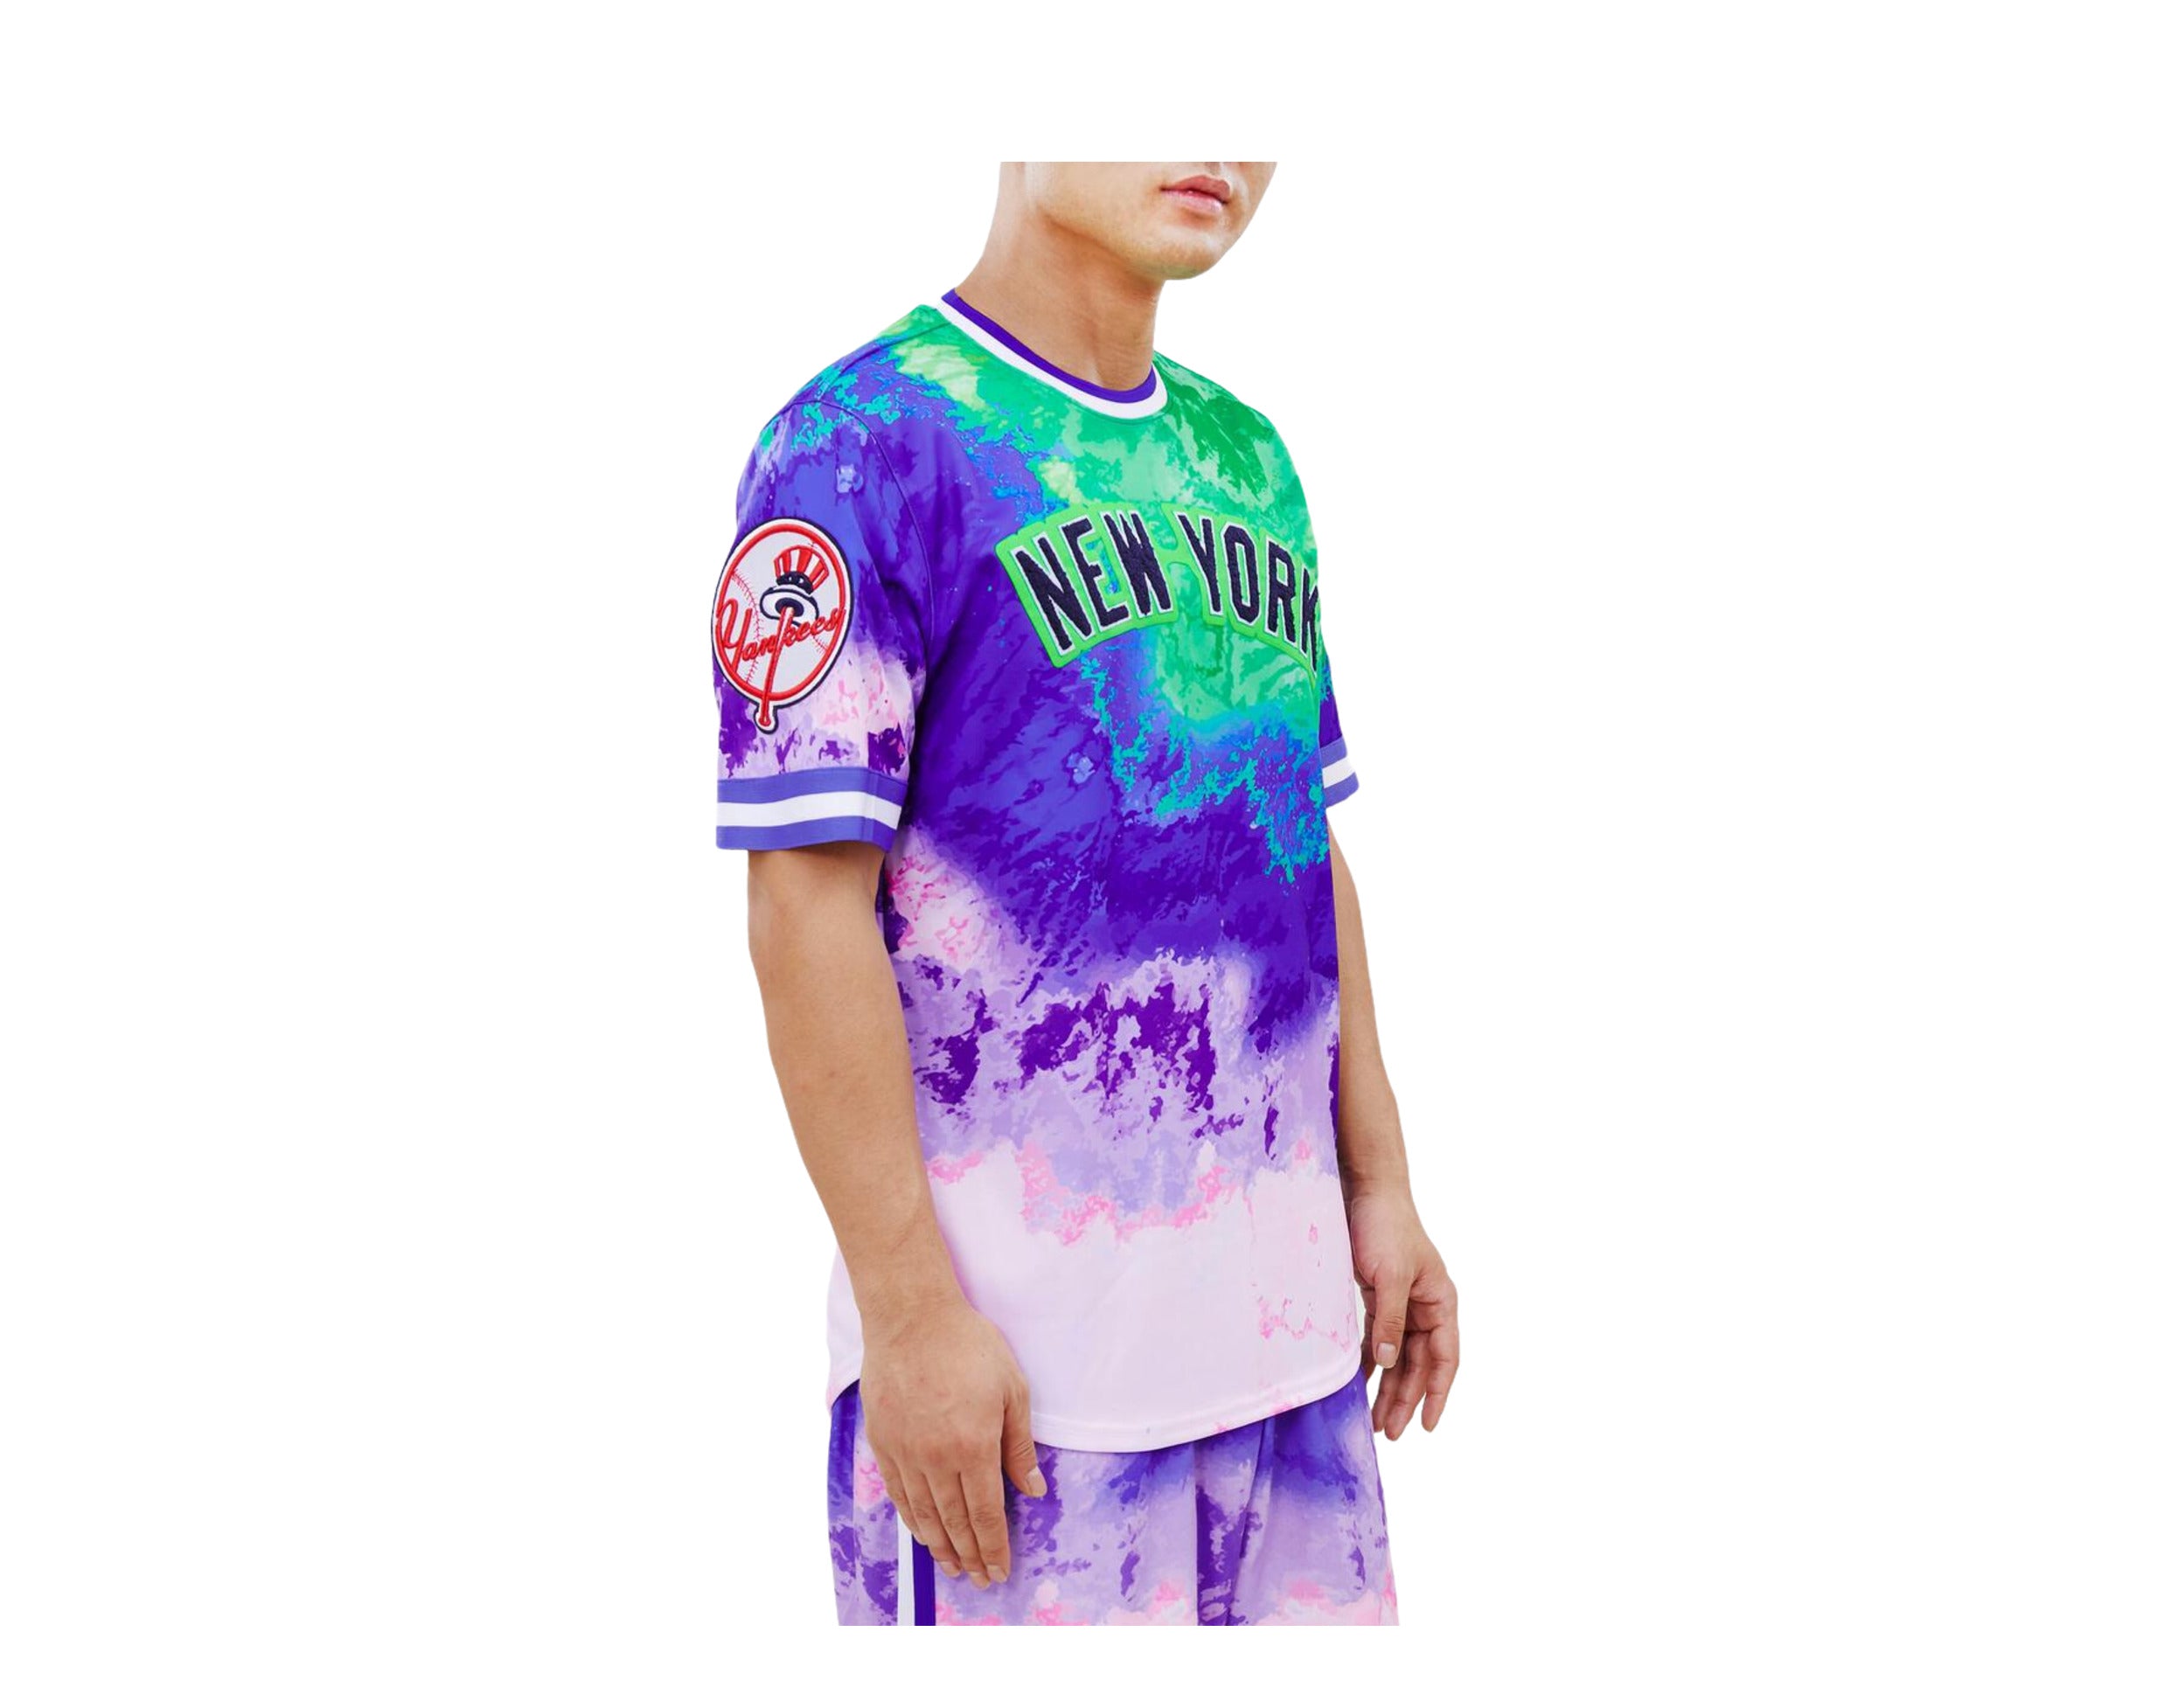 MLB New York Yankees Mix Jersey Personalized Style Polo Shirt - Growkoc